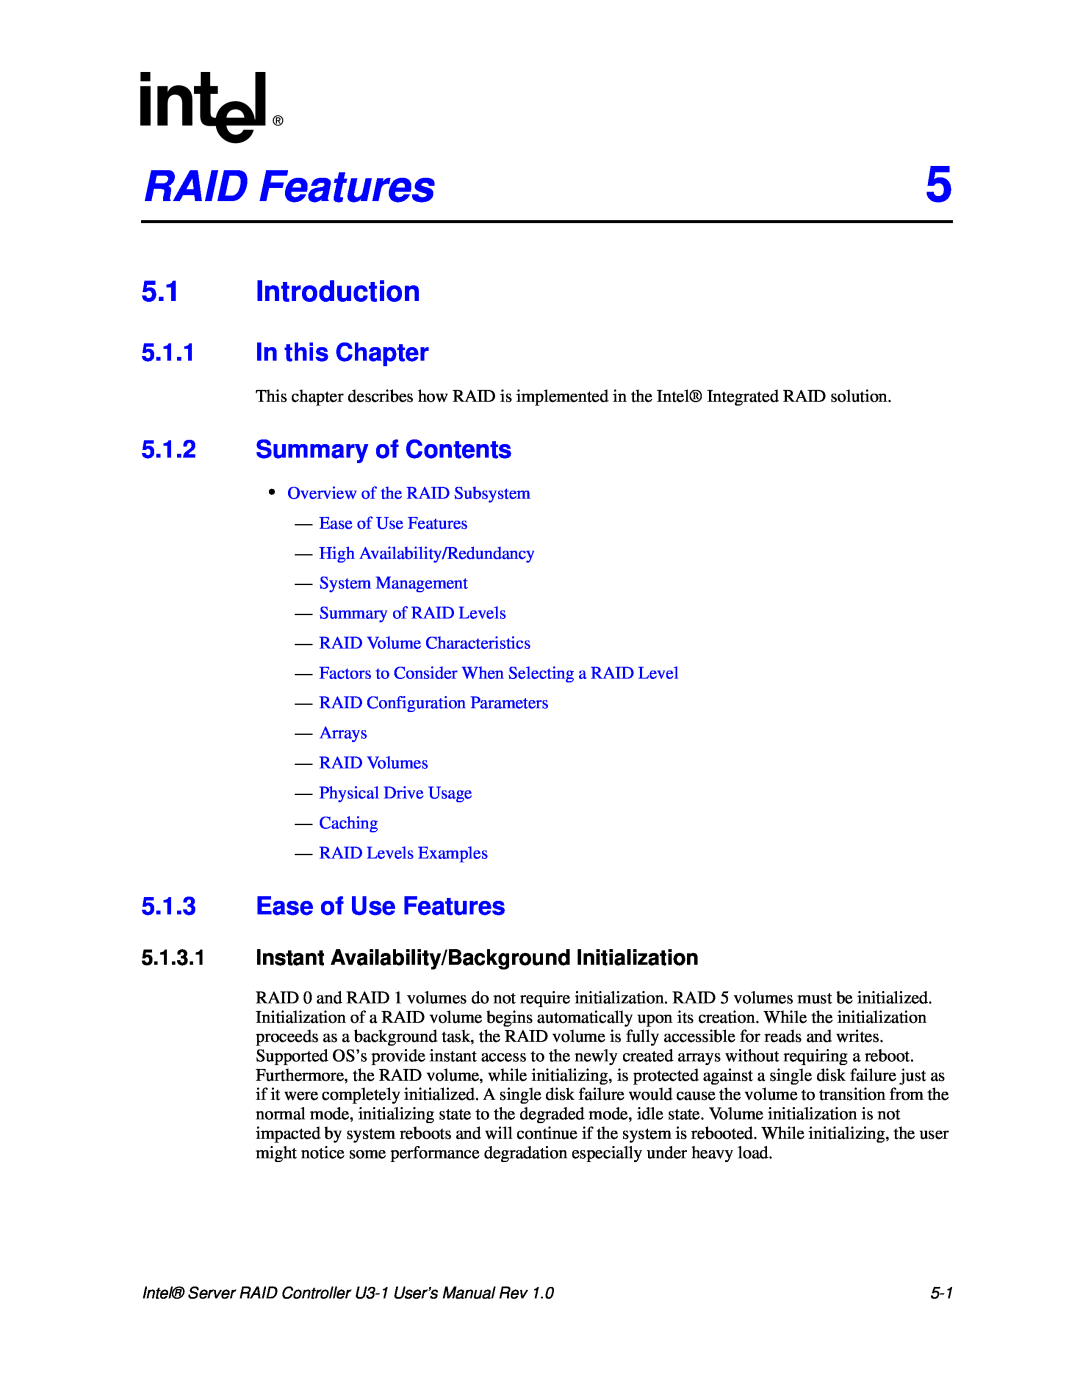 Intel SRCU31 user manual RAID Features, 5.1Introduction 